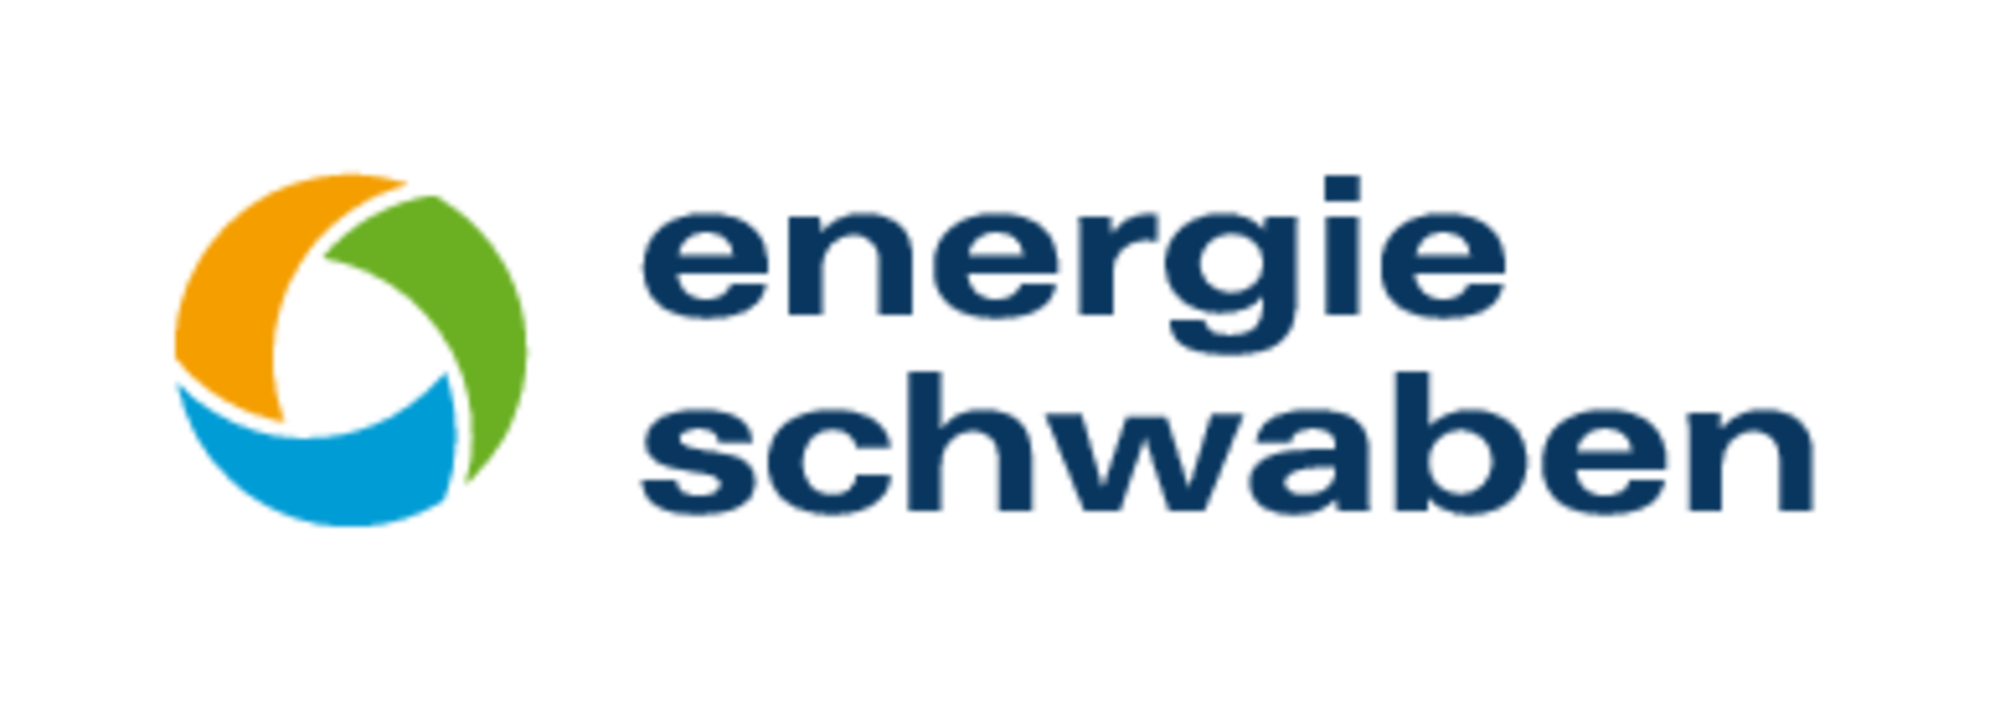 Das Logo des Sponsors Energie Schwaben.